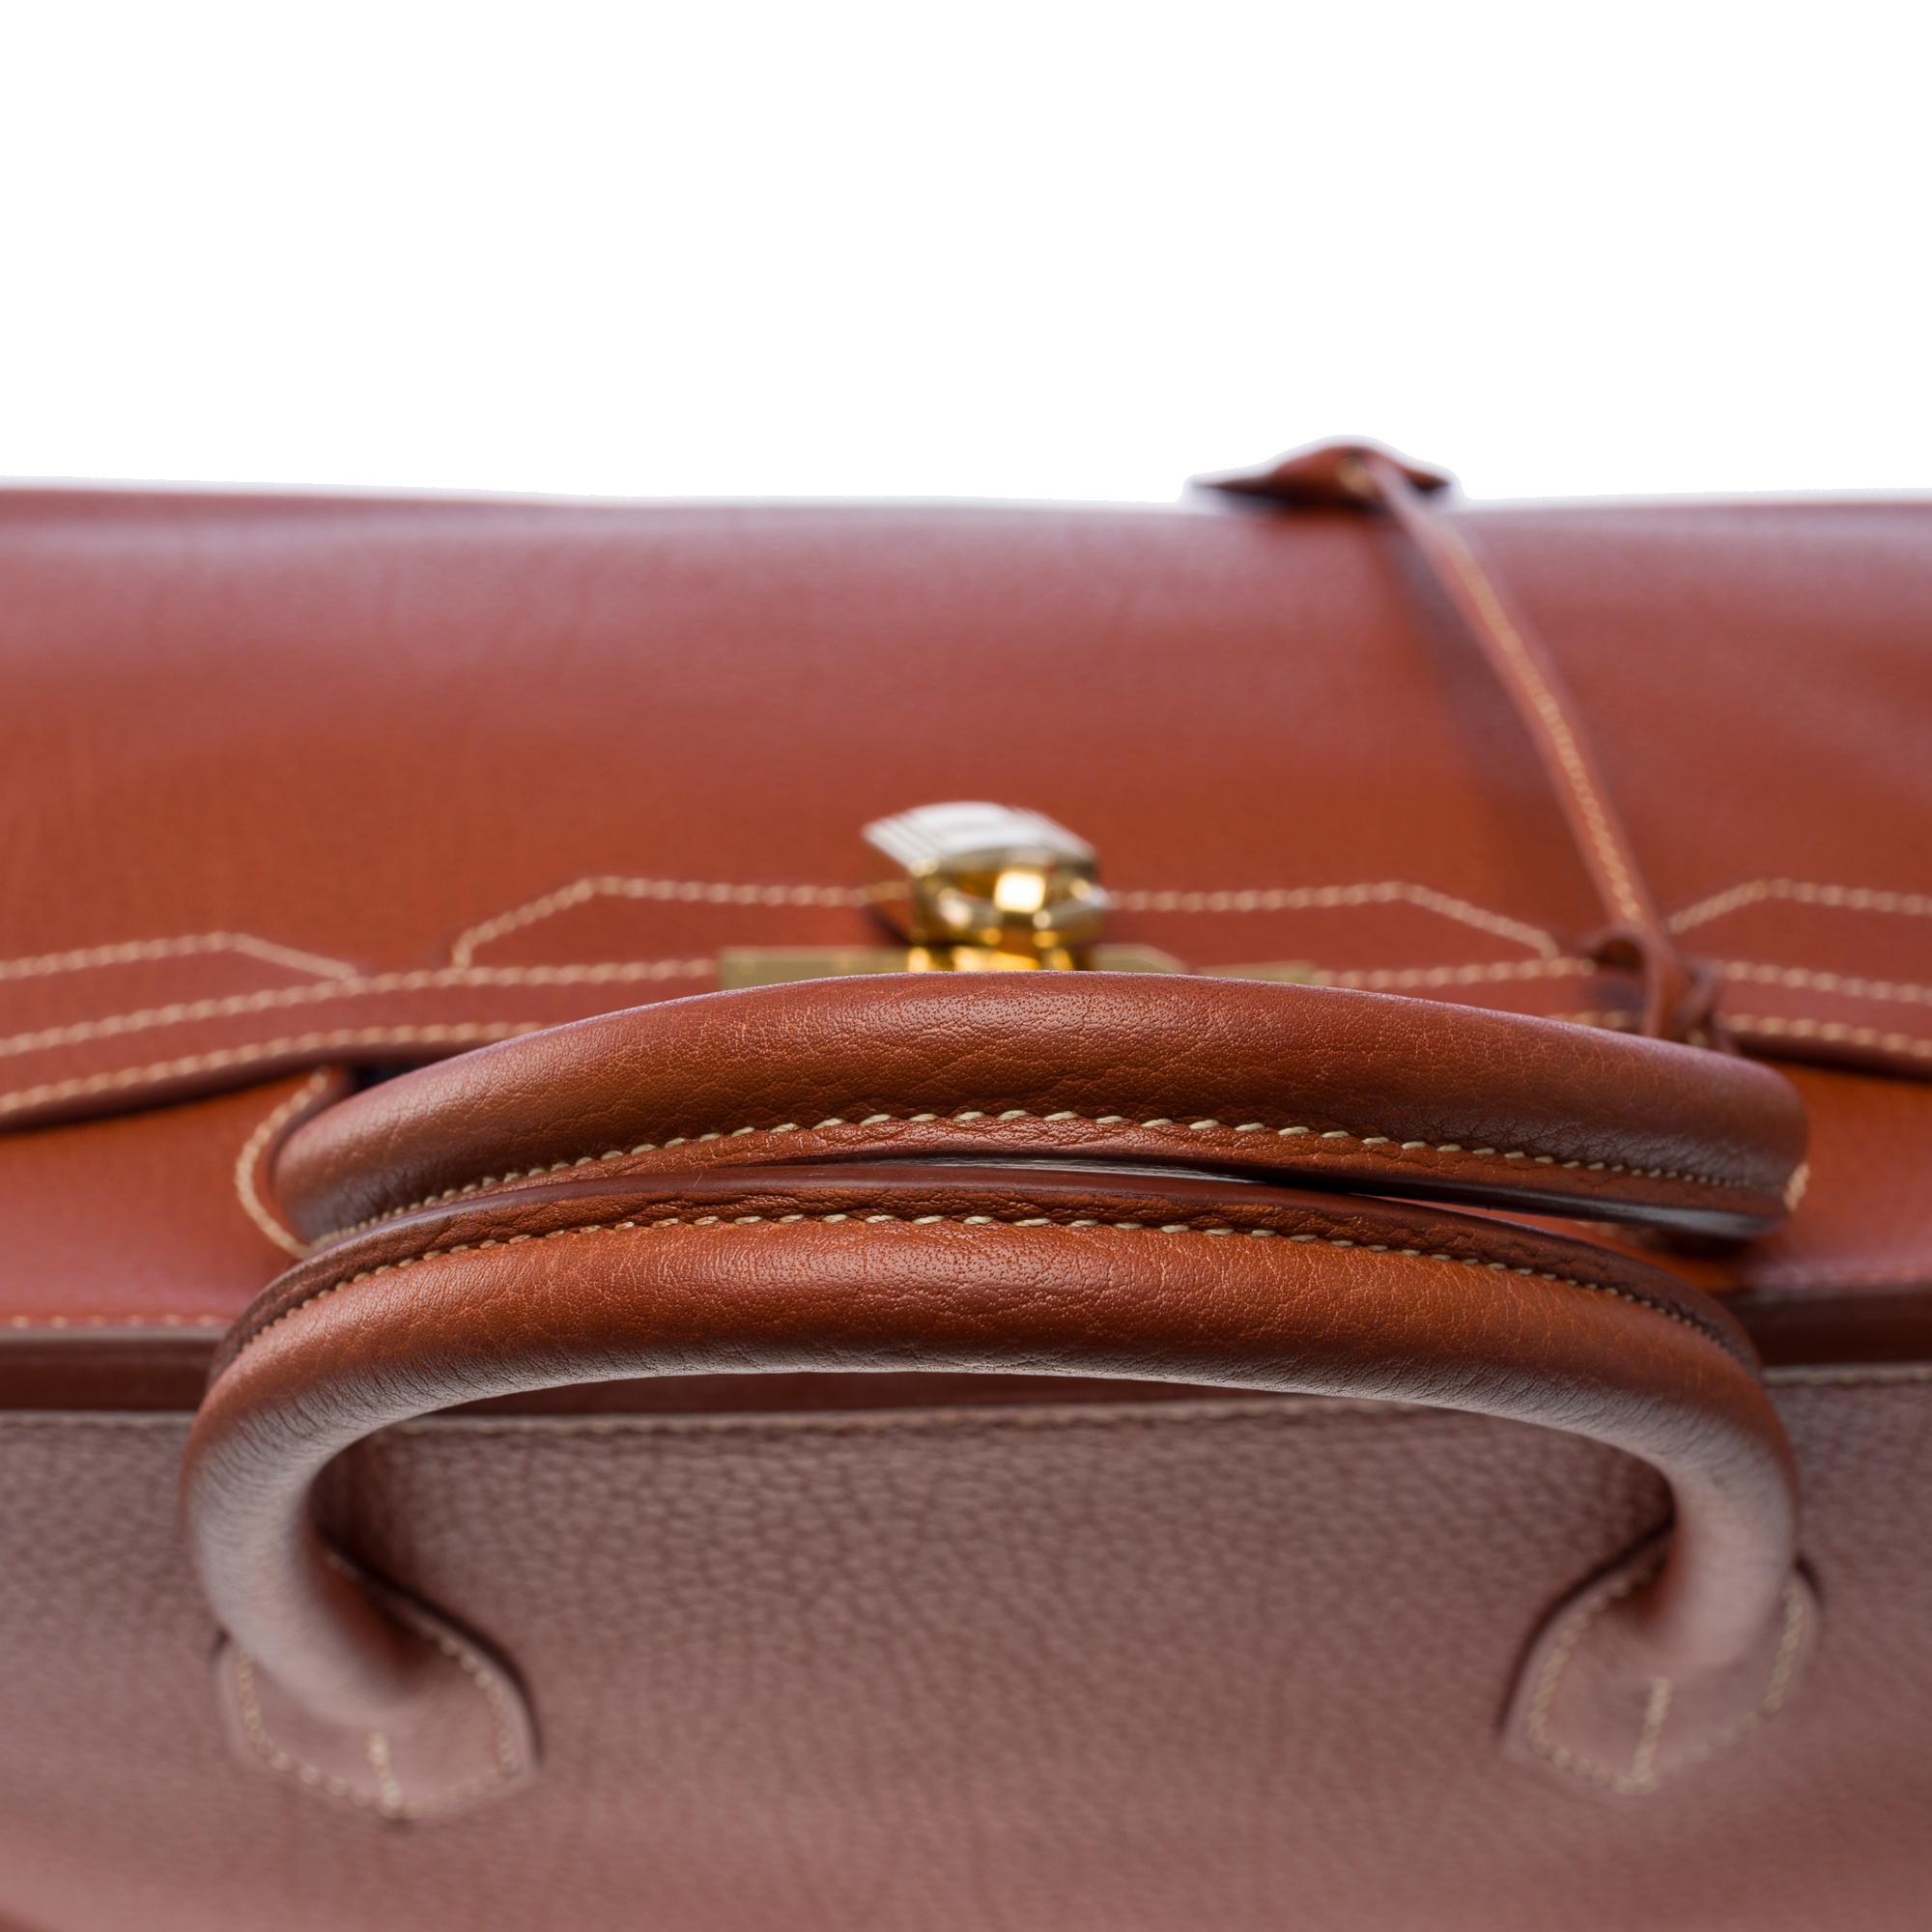 Classy & Rare Hermes Birkin 40 handbag in Brick Fjord leather, GHW 6